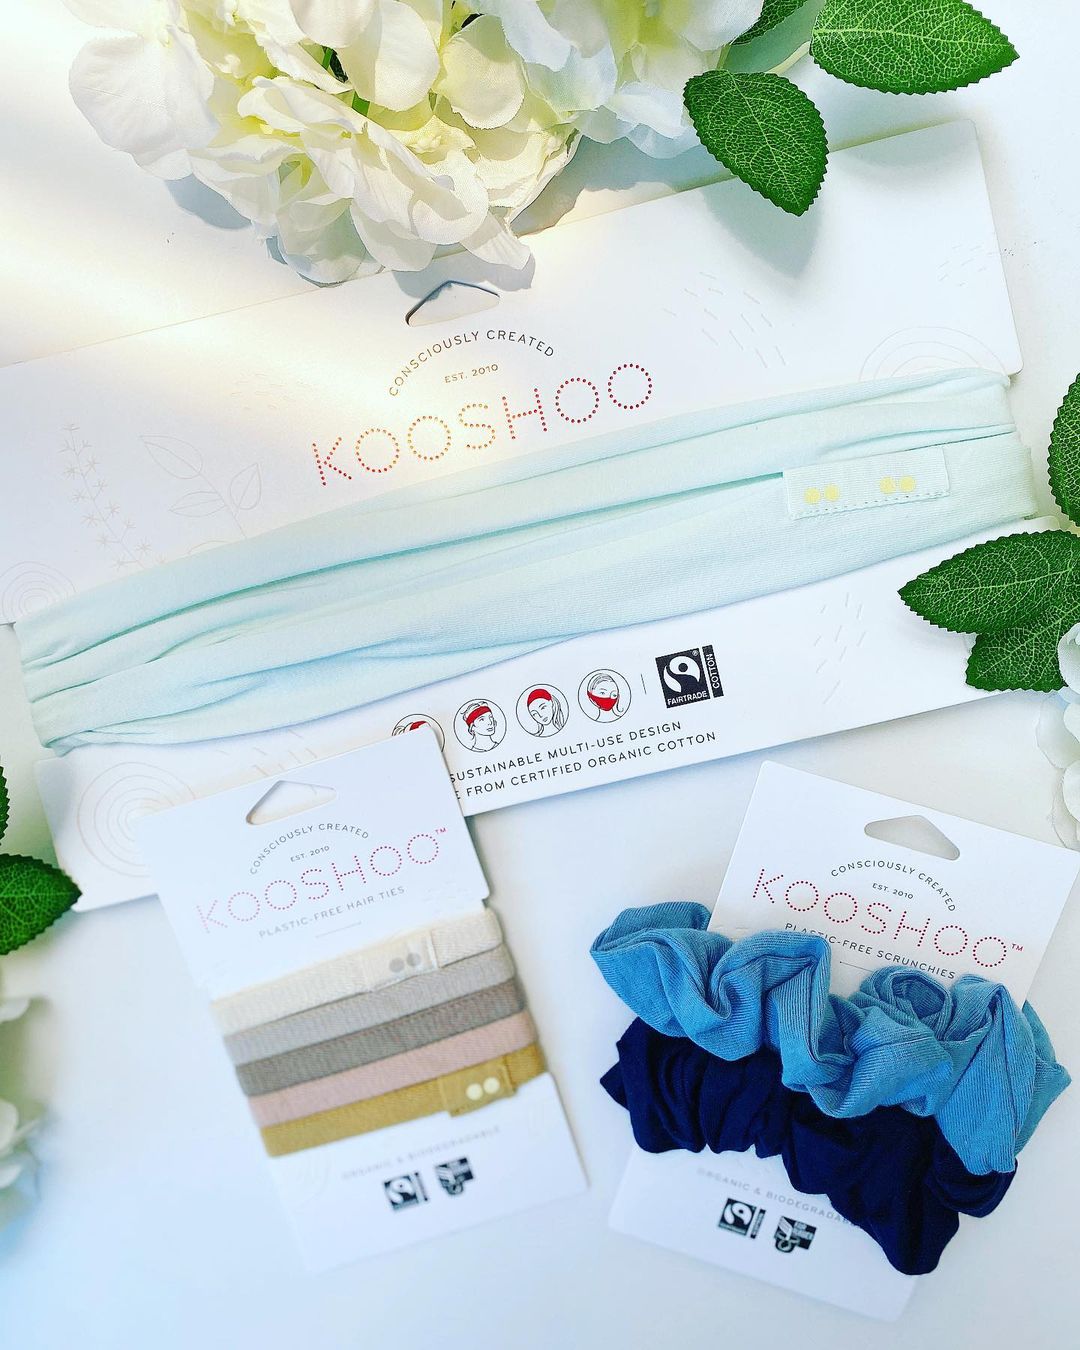 Kooshoo Organic Hair Accessories  review and promo code